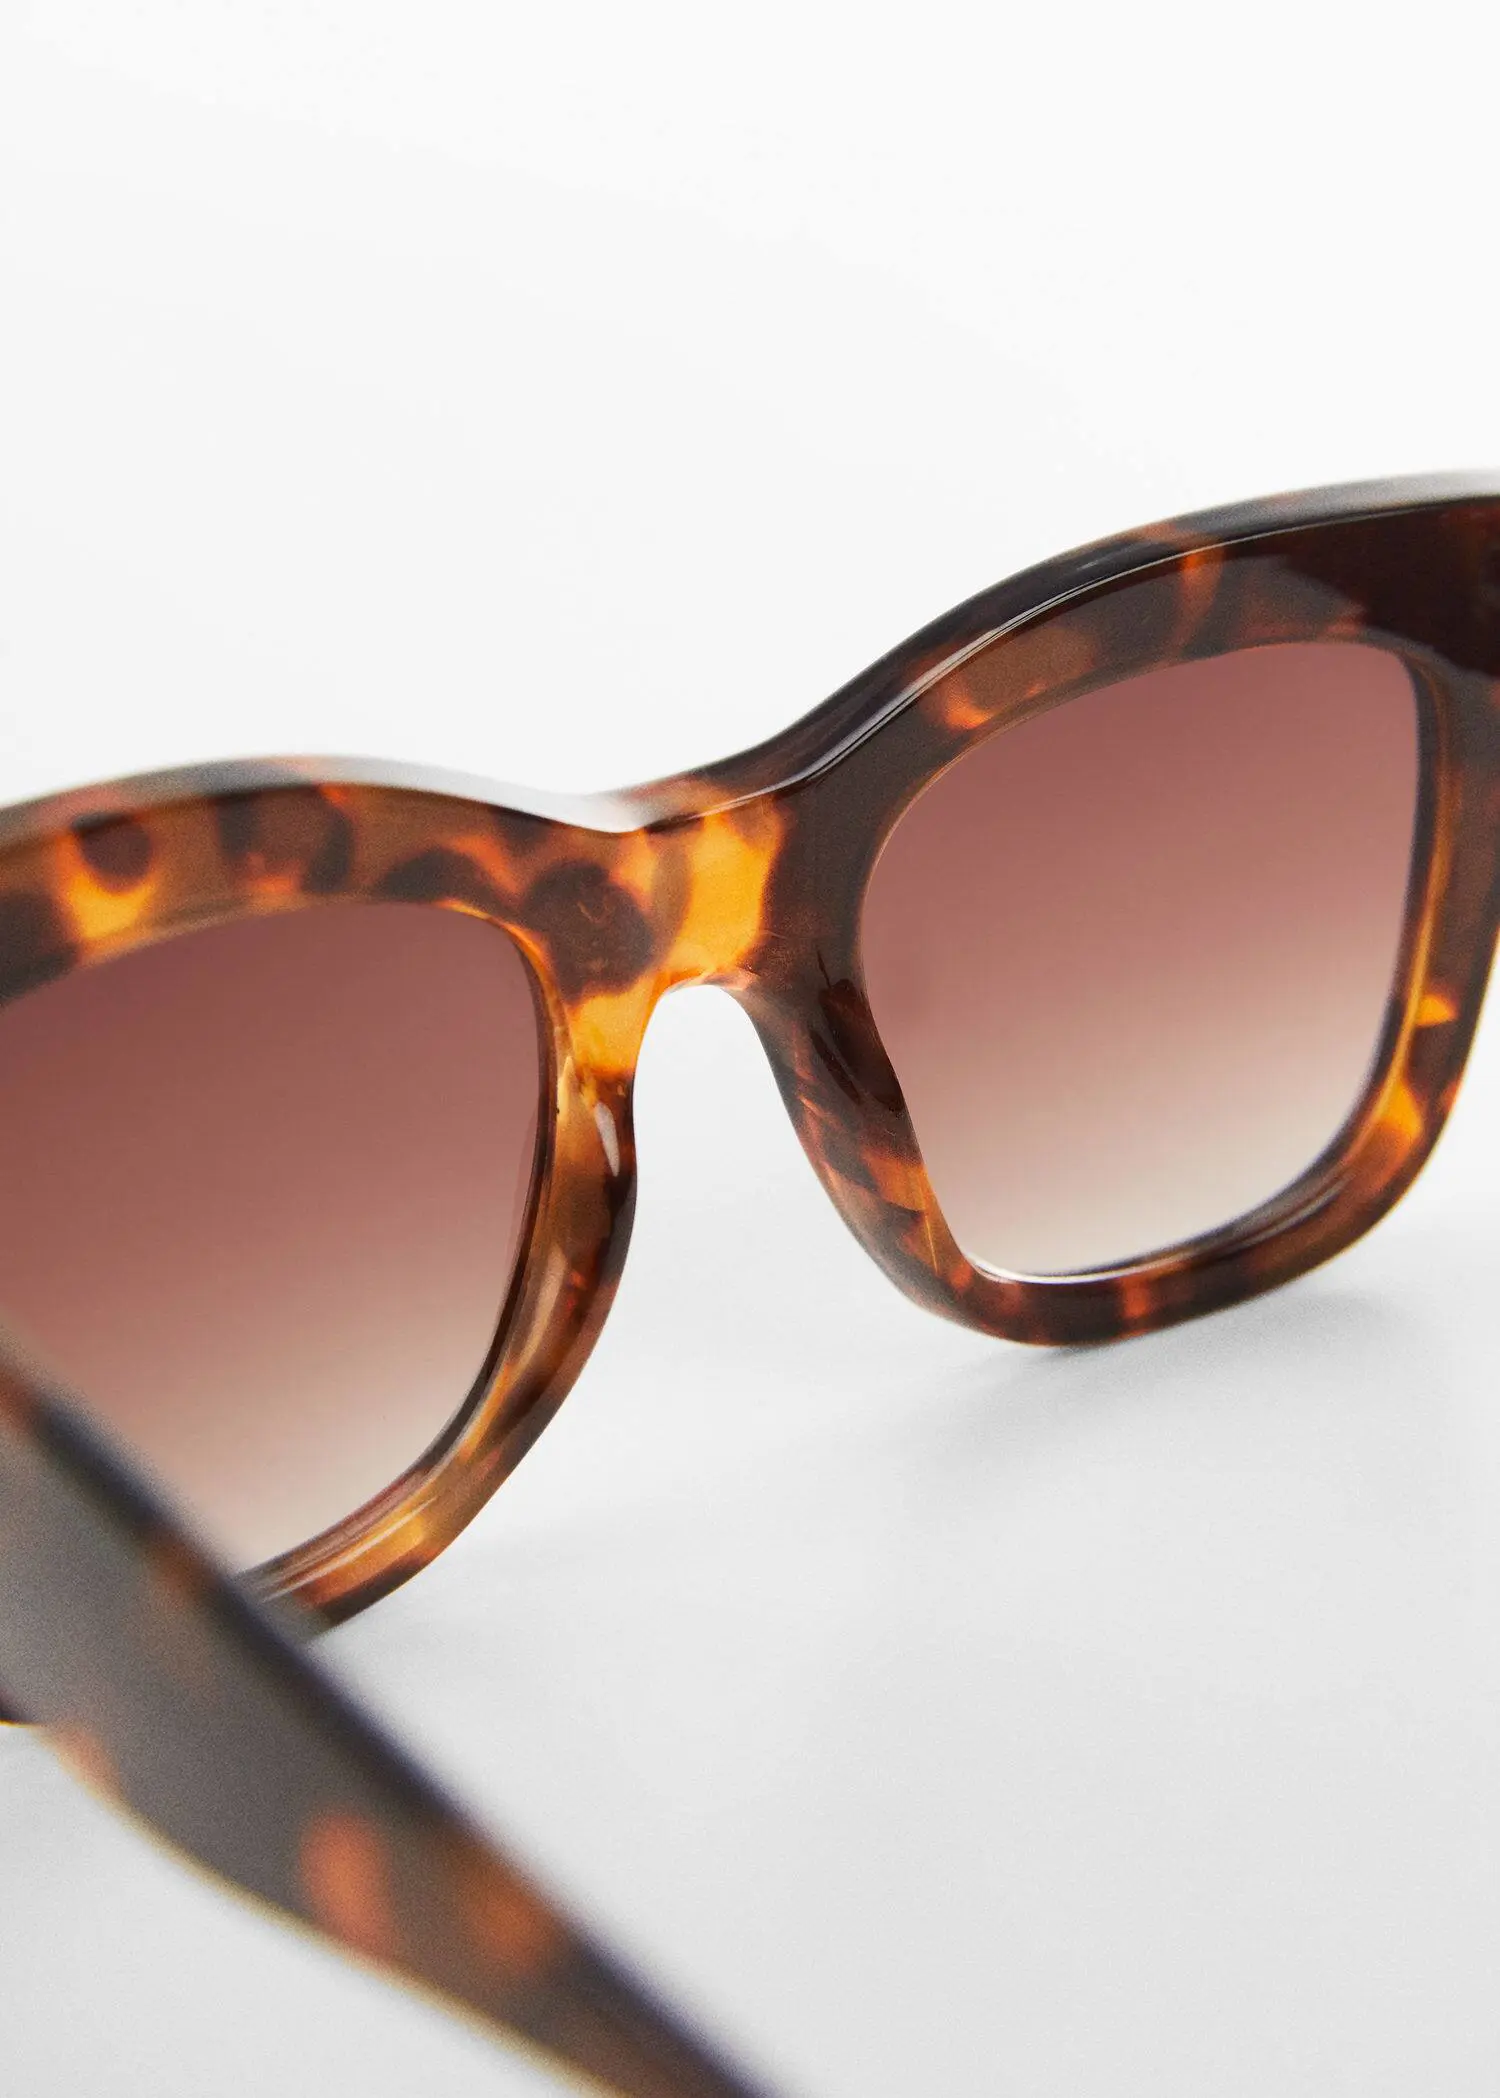 Mango Squared frame sunglasses. 3